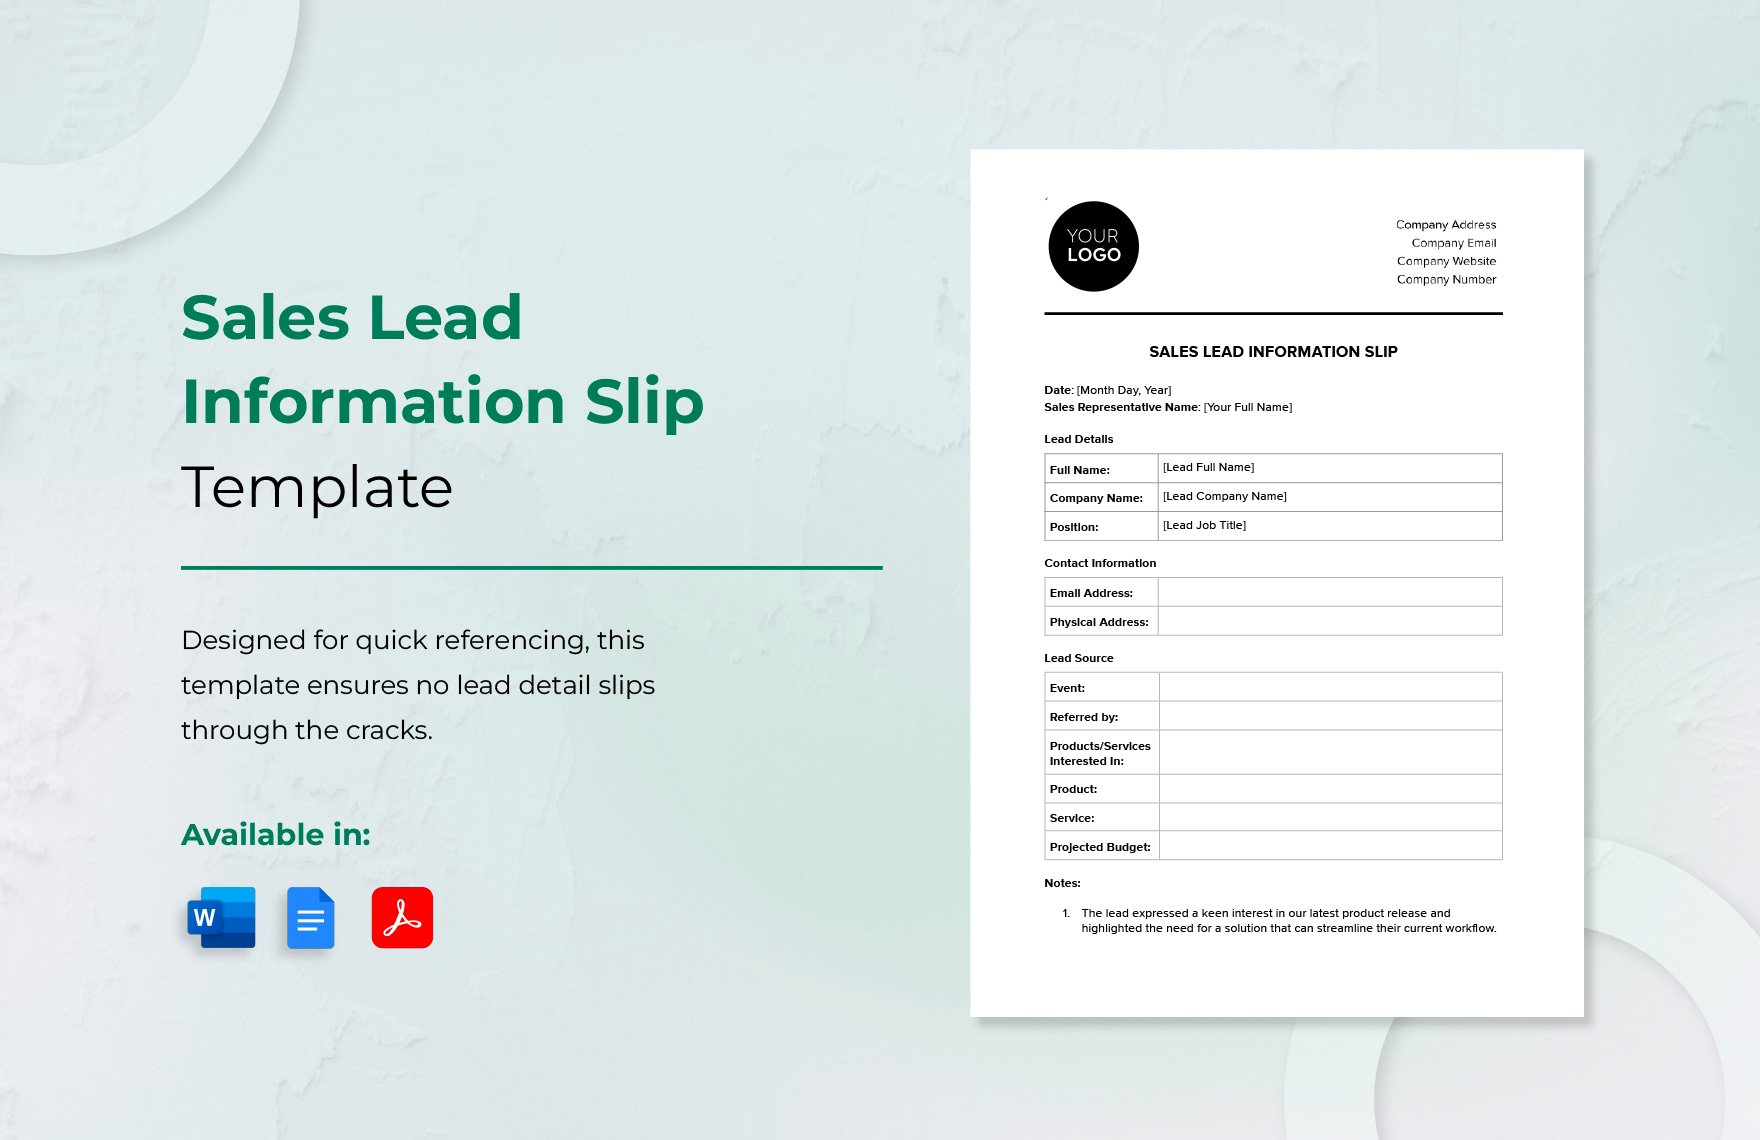 Sales Lead Information Slip Template in Word, Google Docs, PDF